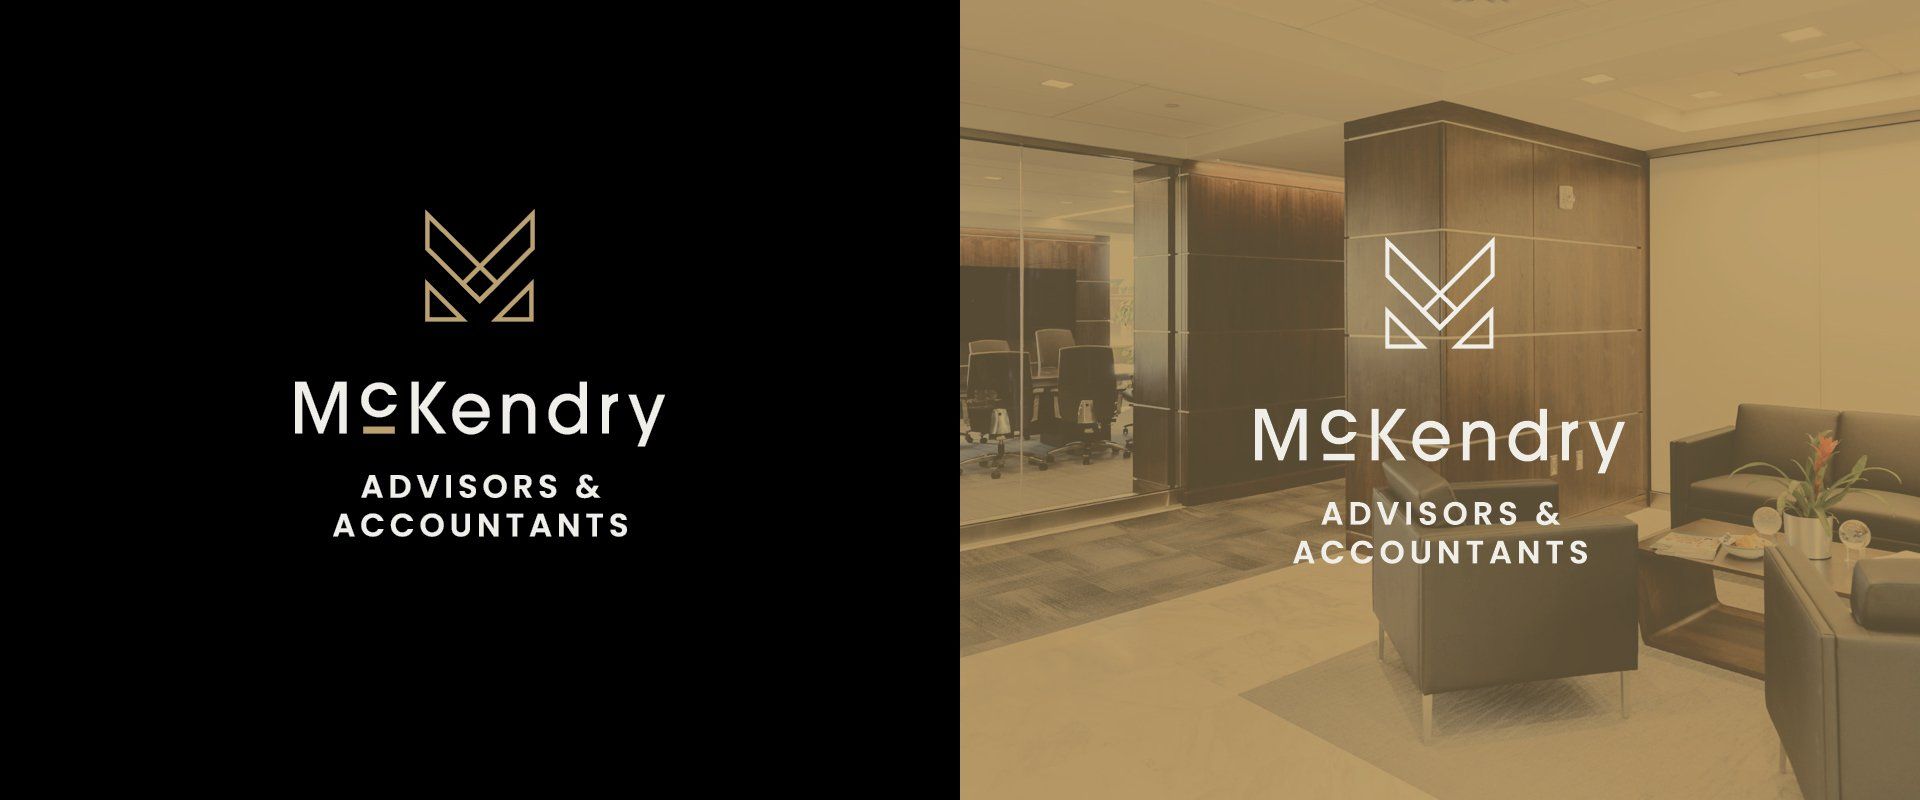 McKendry Advisors and Accountants branding by Vanilla Hayes Ltd in Blenheim, New Zealand